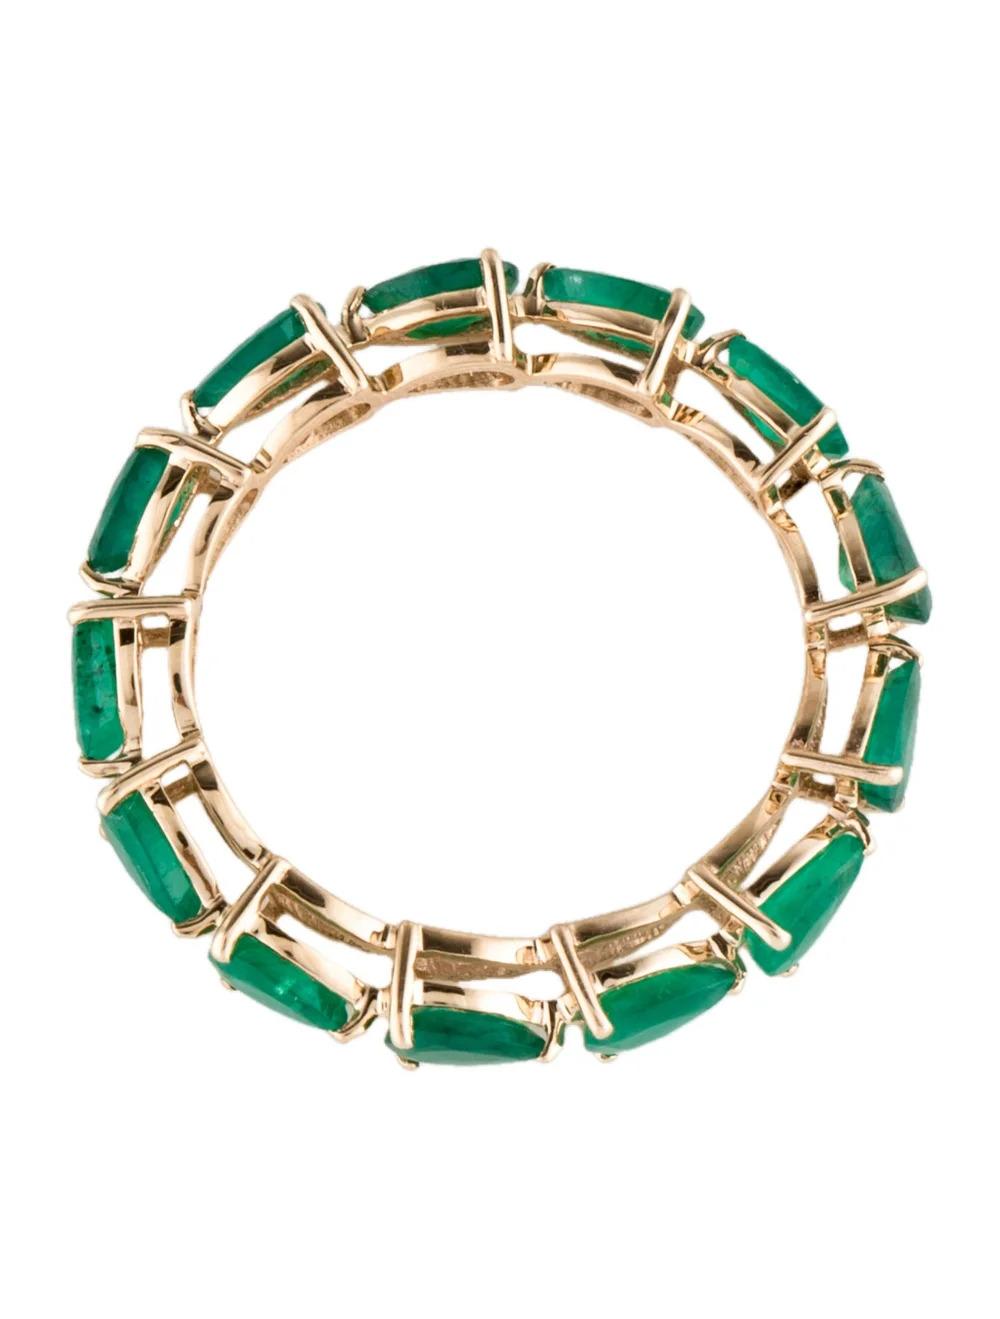 Women's 14K Emerald Eternity Band Ring Size 7.75 - Gemstone Fine Jewelry Vintage Style